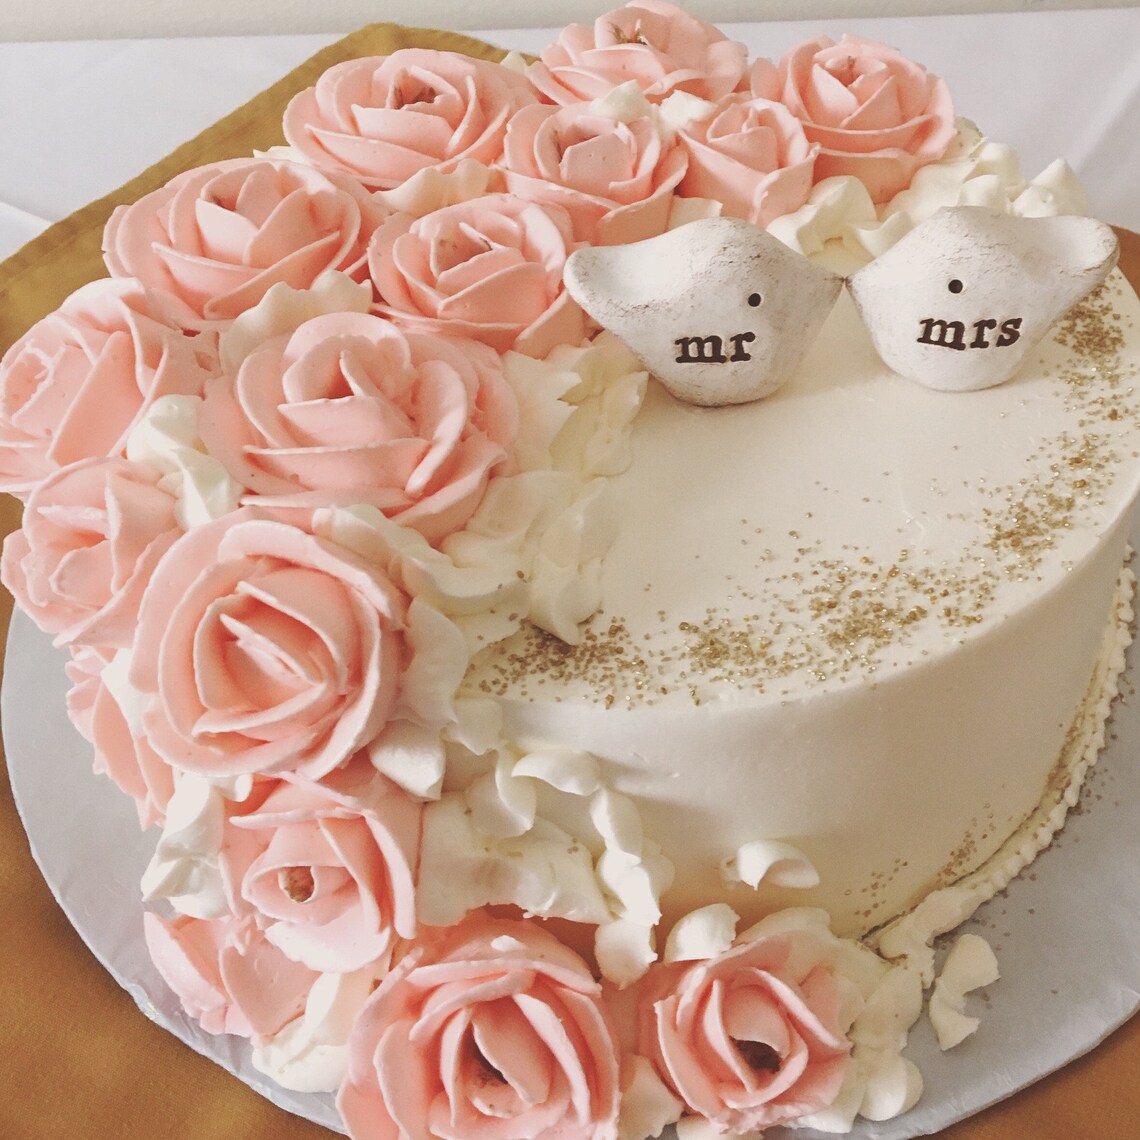 mr mrs wedding cake topper love birds / bride groom / vintage white clay love birds cake decor